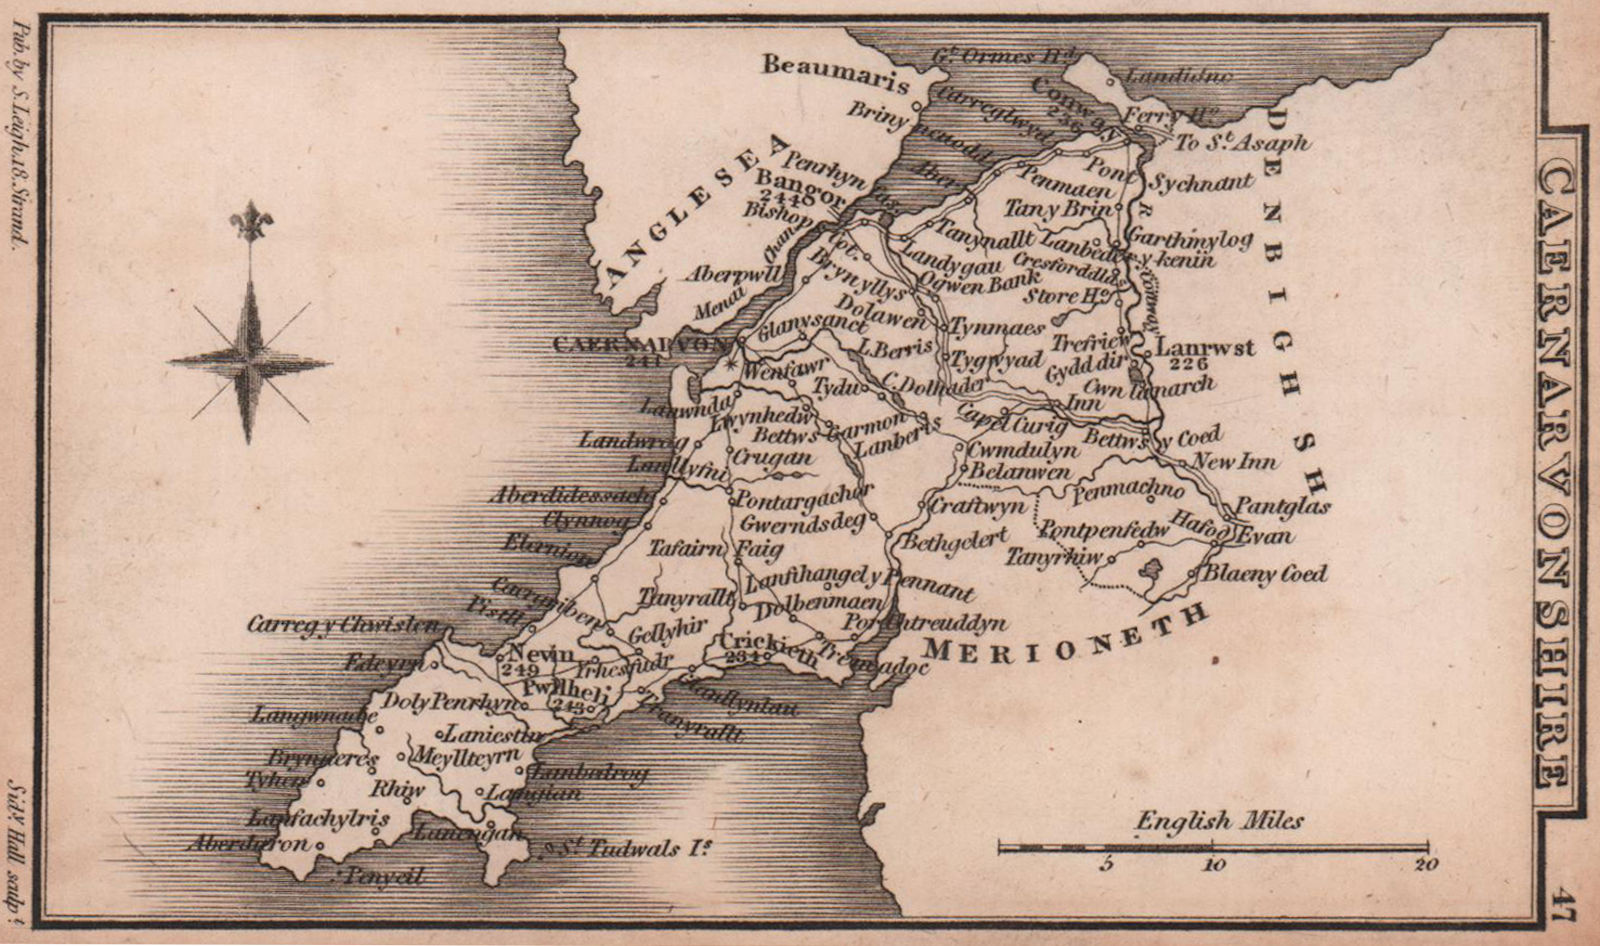 Caernarvonshire Caernarfonshire county map by Samuel Leigh / Sidney Hall c1820